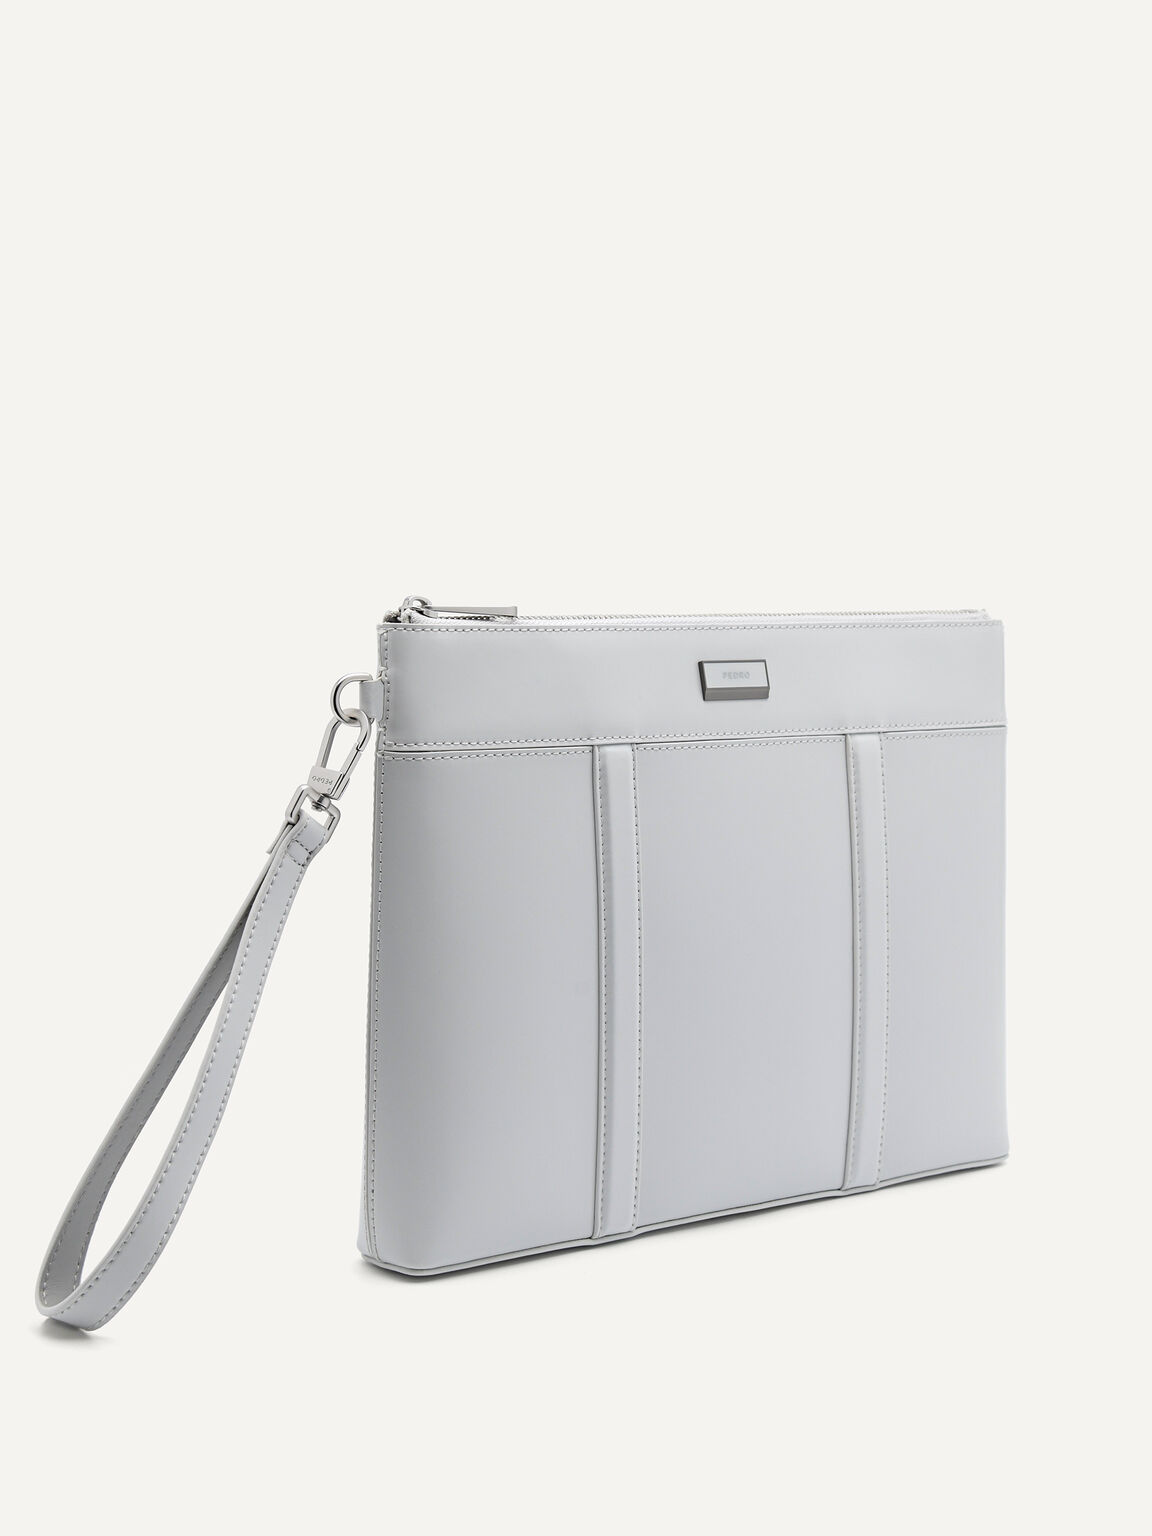 Allen Leather Portfolio Bag, Light Grey, hi-res